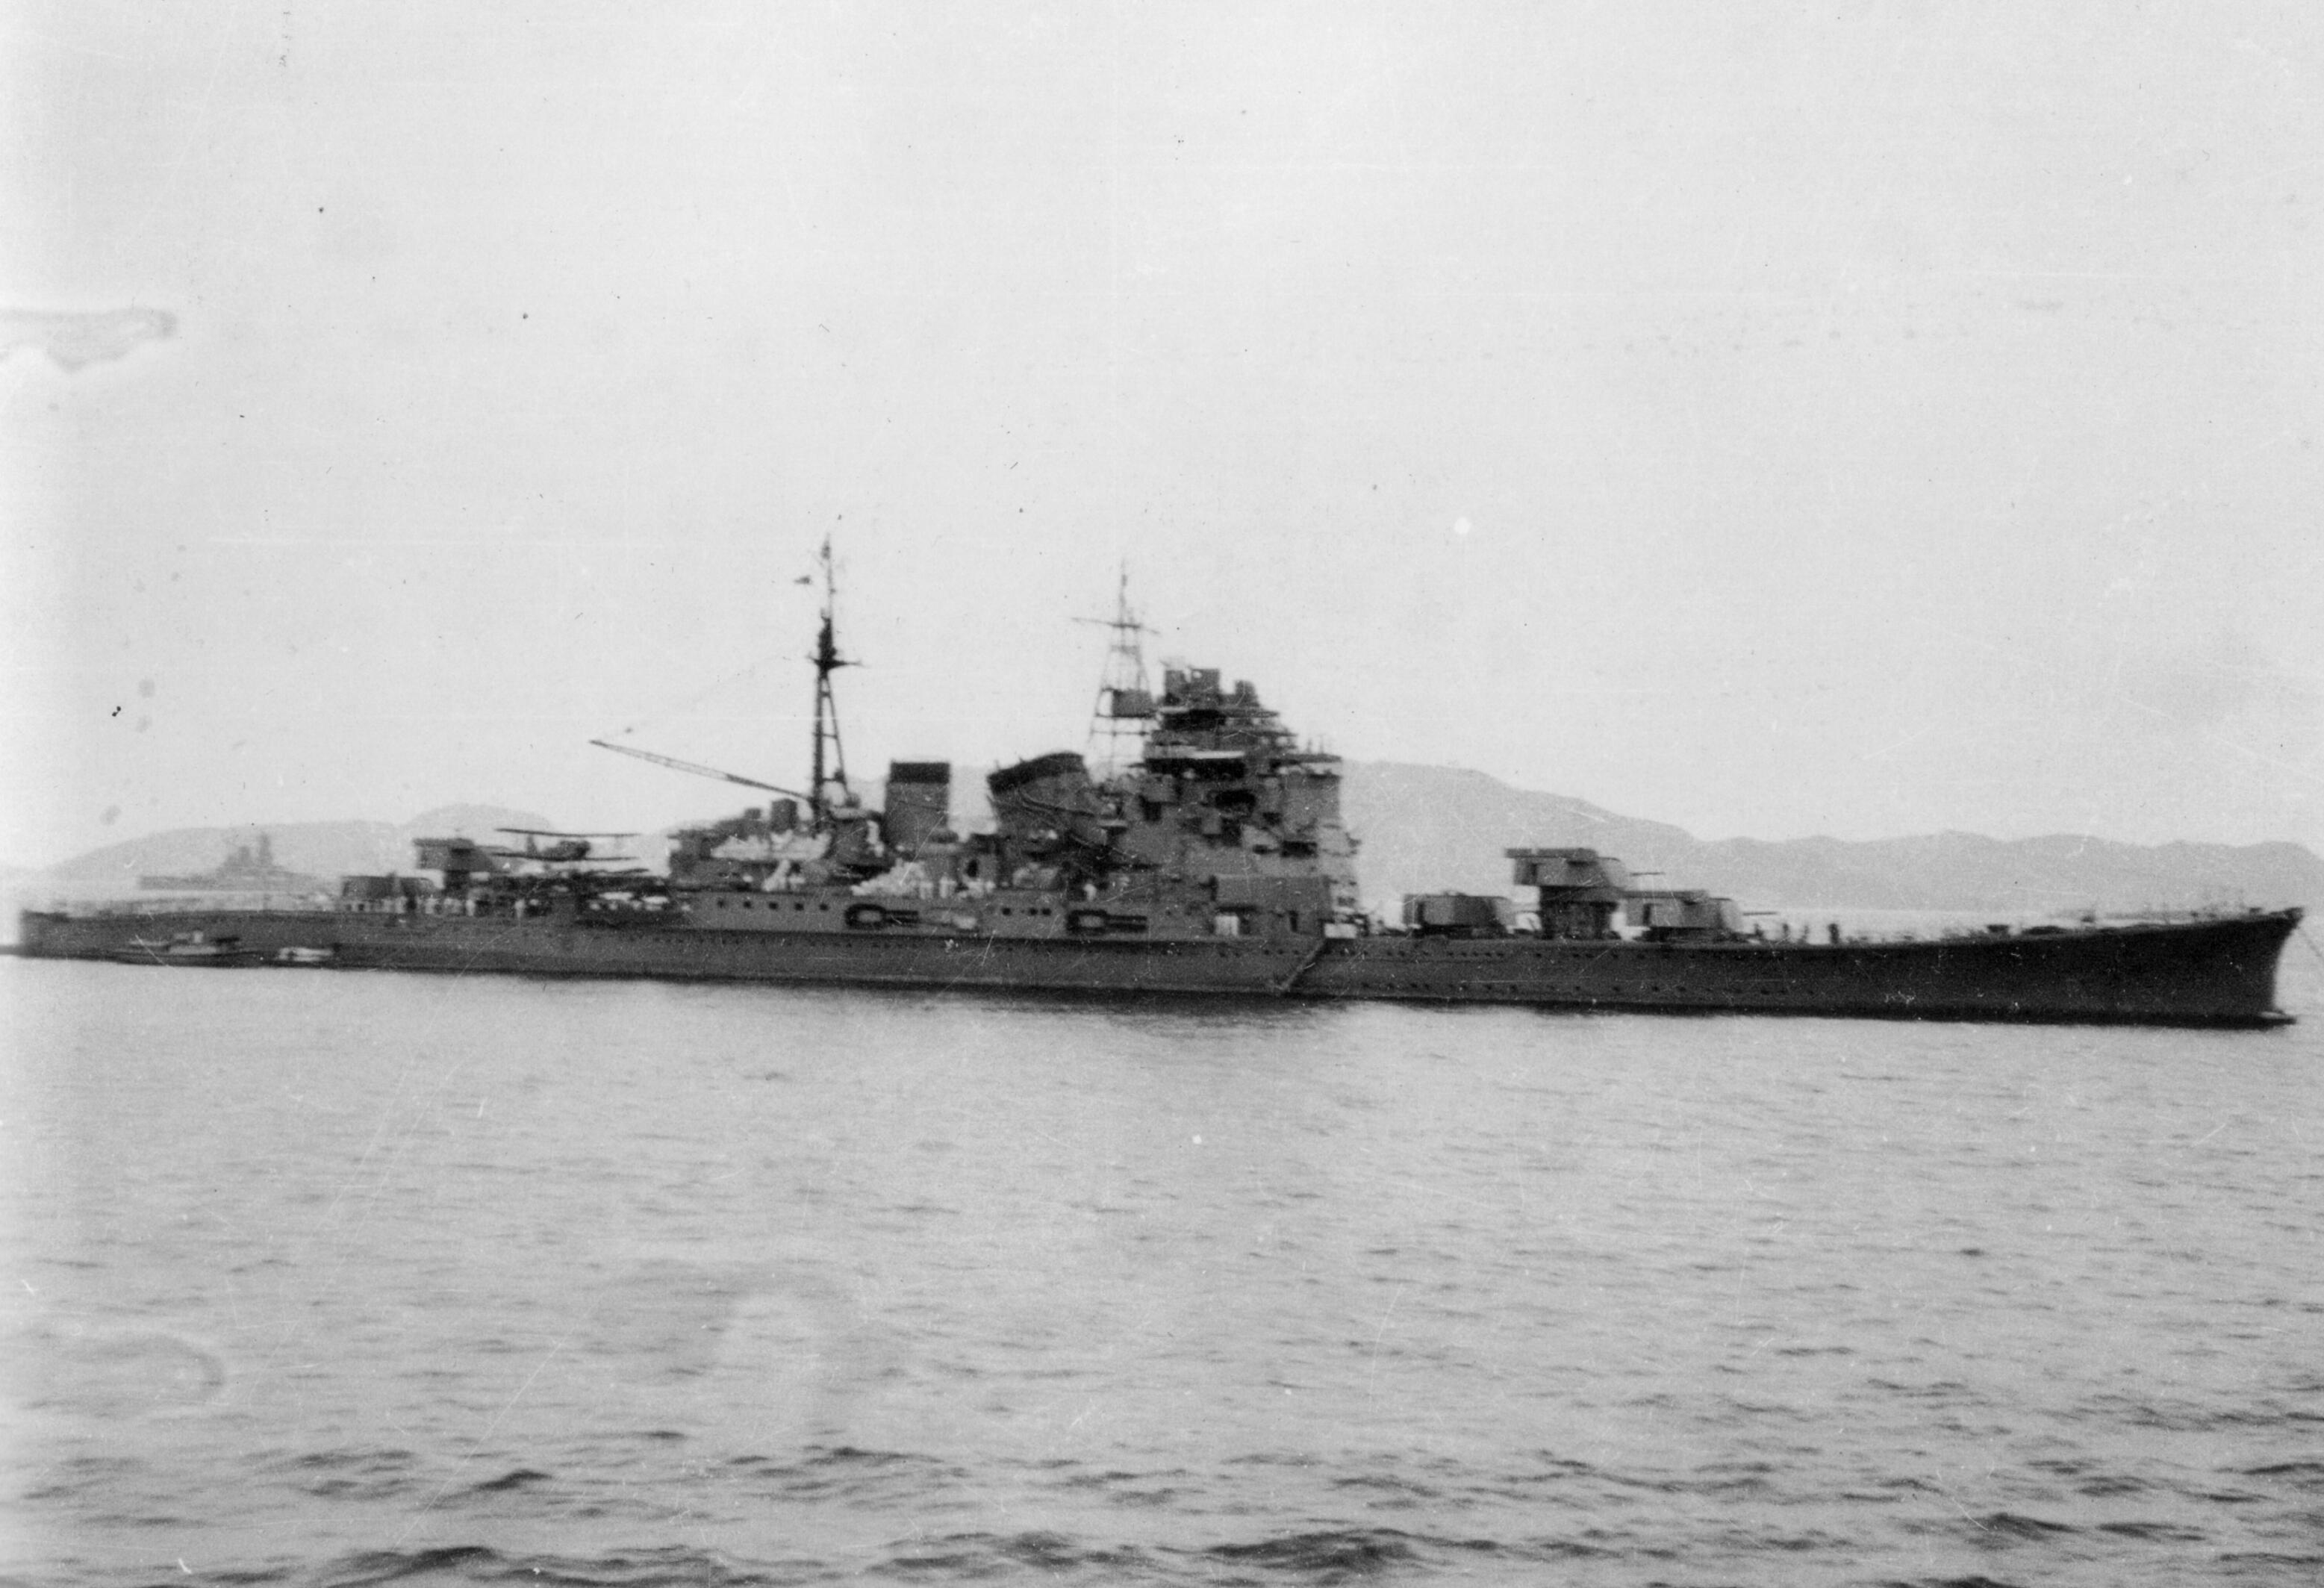 Japanese_cruiser_Chokai_in_1942_at_Chuuk_Islands.jpg